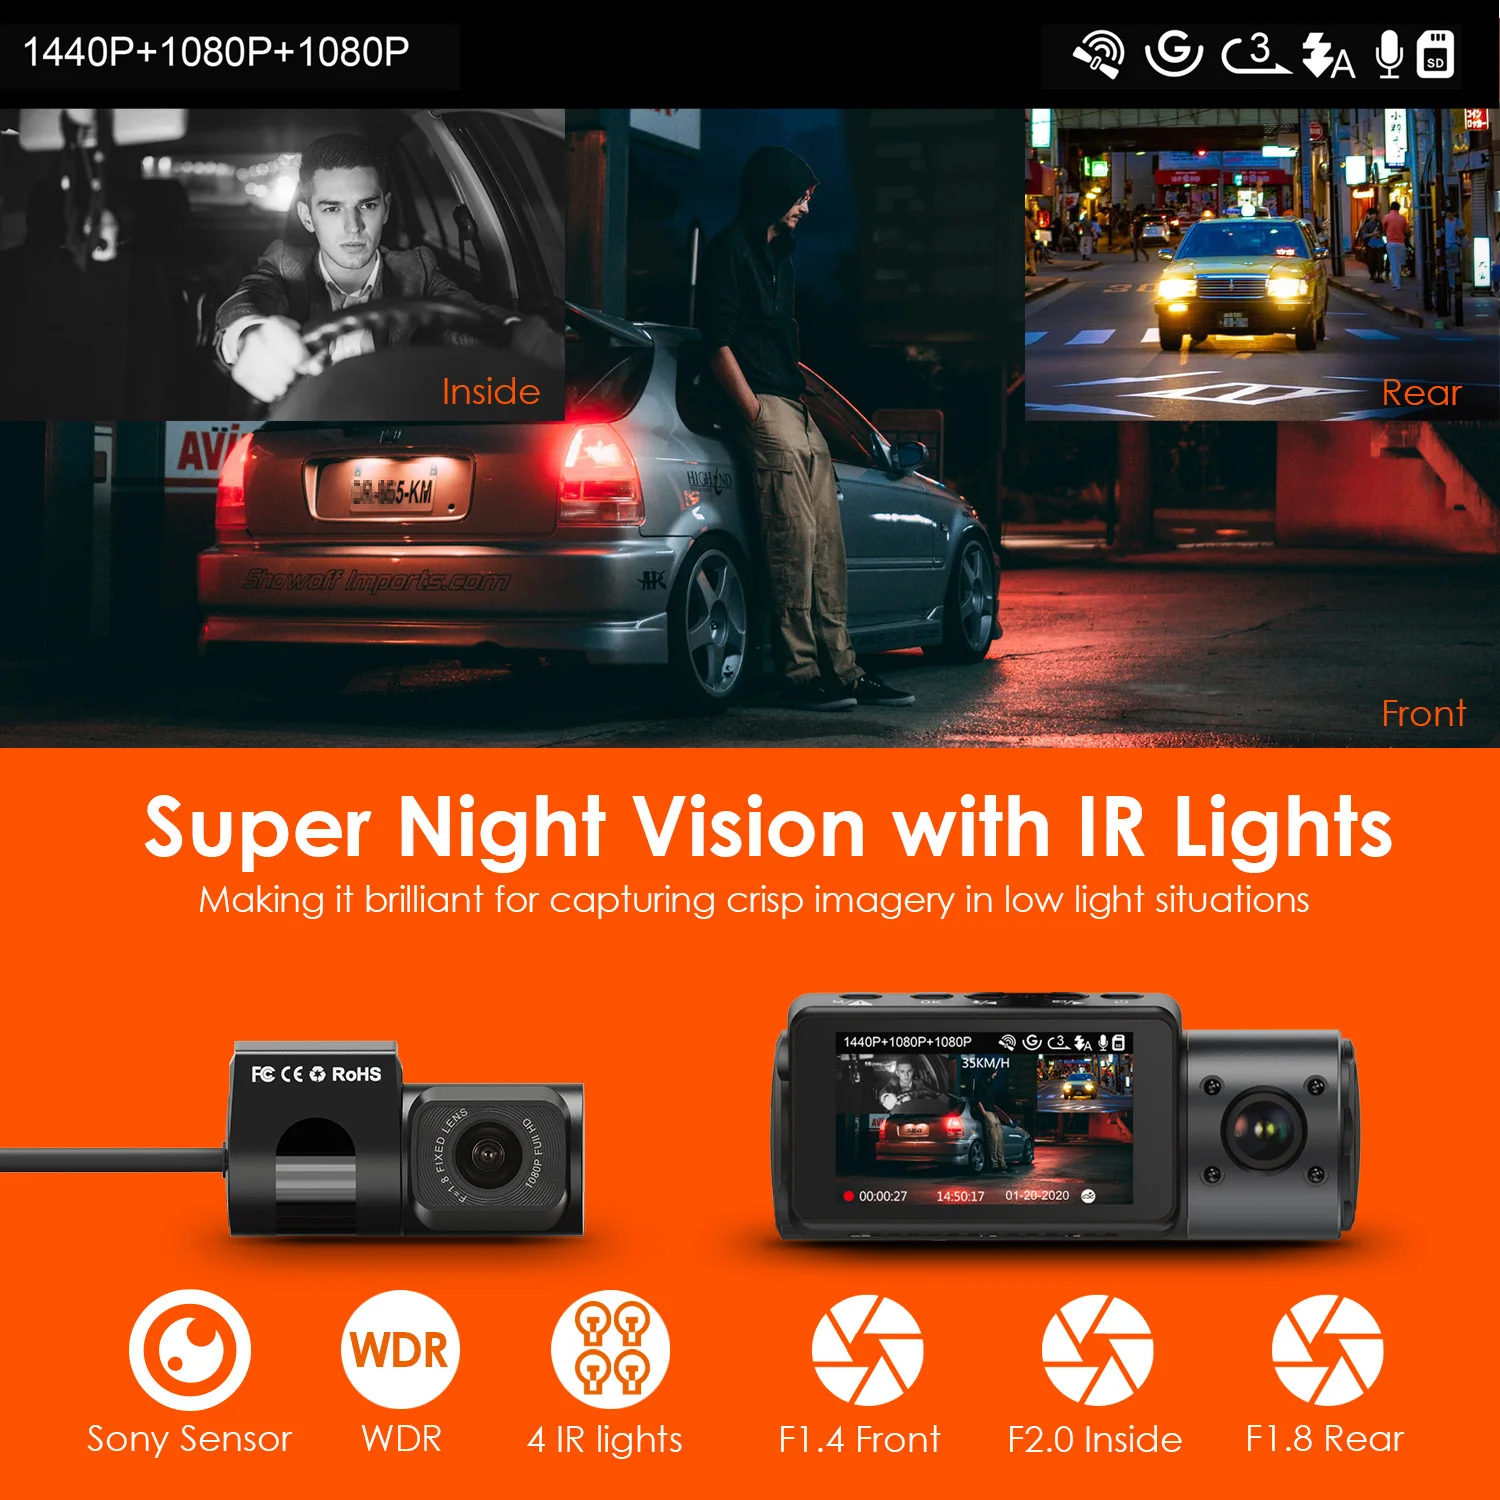 Vantrue X4s Duo Car DVR Front And Rear 4K X4S Duo Dash Cam 5G WiFi APP Car  Camera Super Night Vision Parking Mode Black box - AliExpress